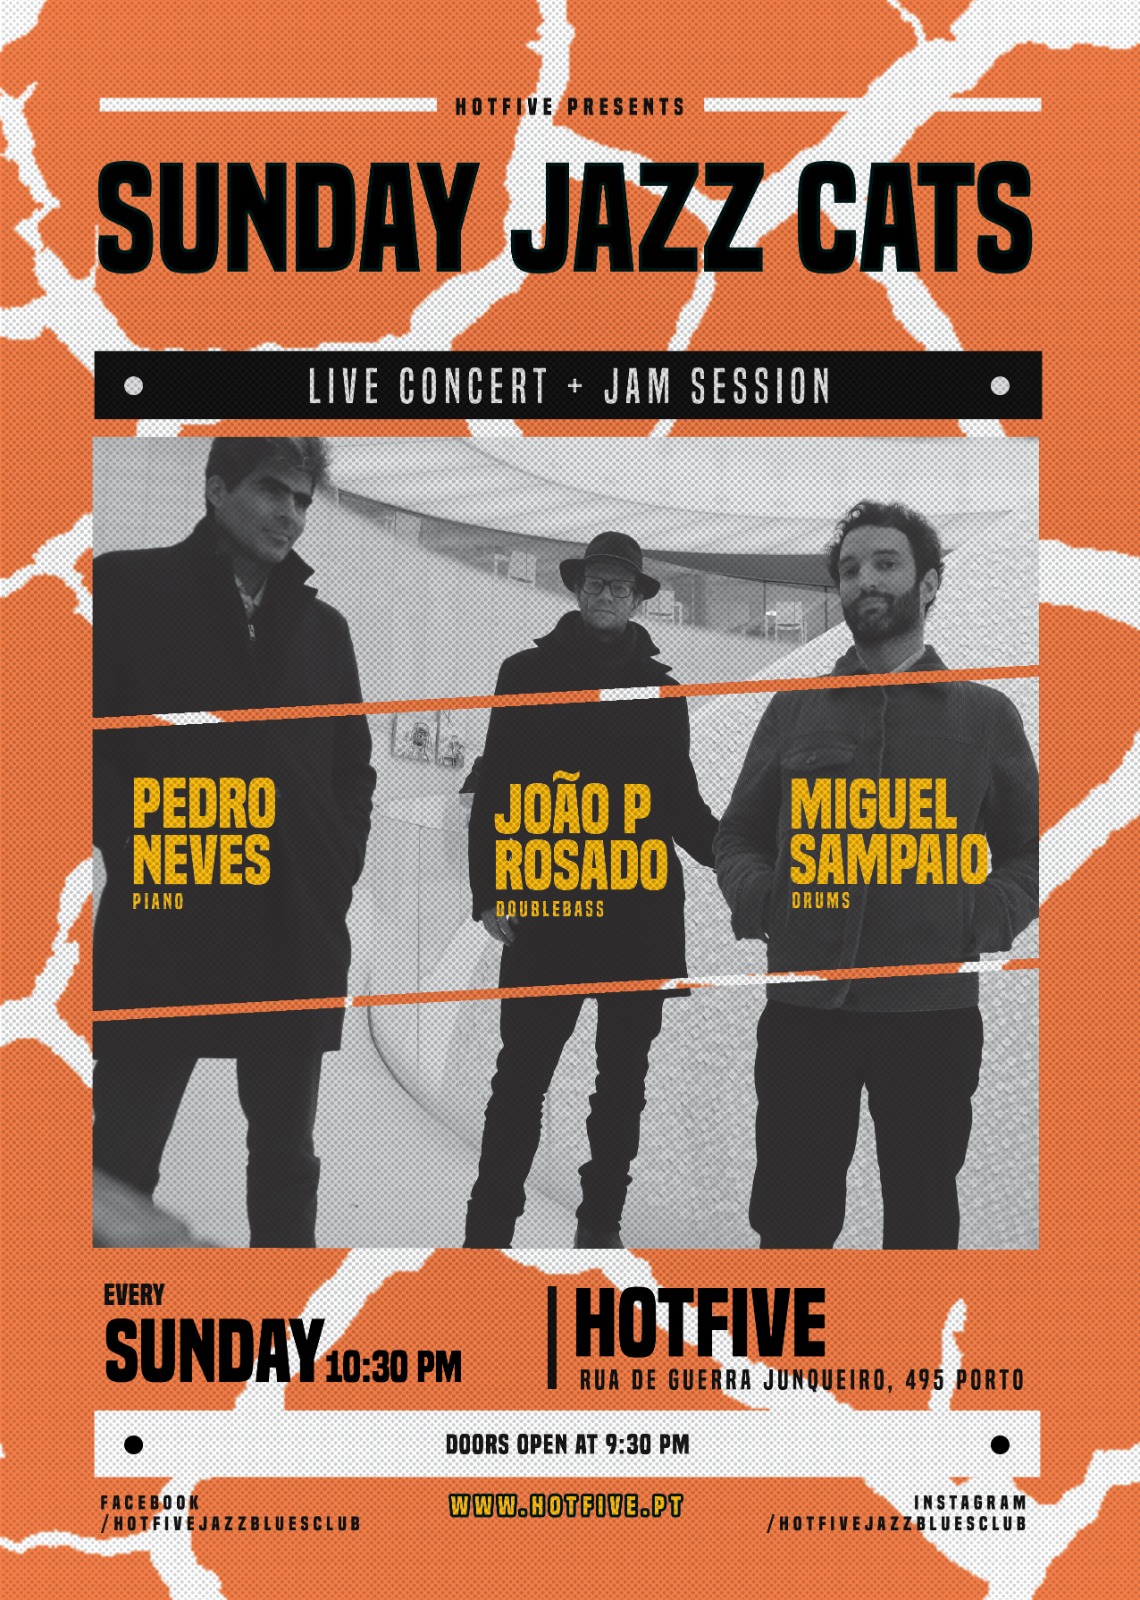 Sunday jazz cats - Live Concert + Jam Session